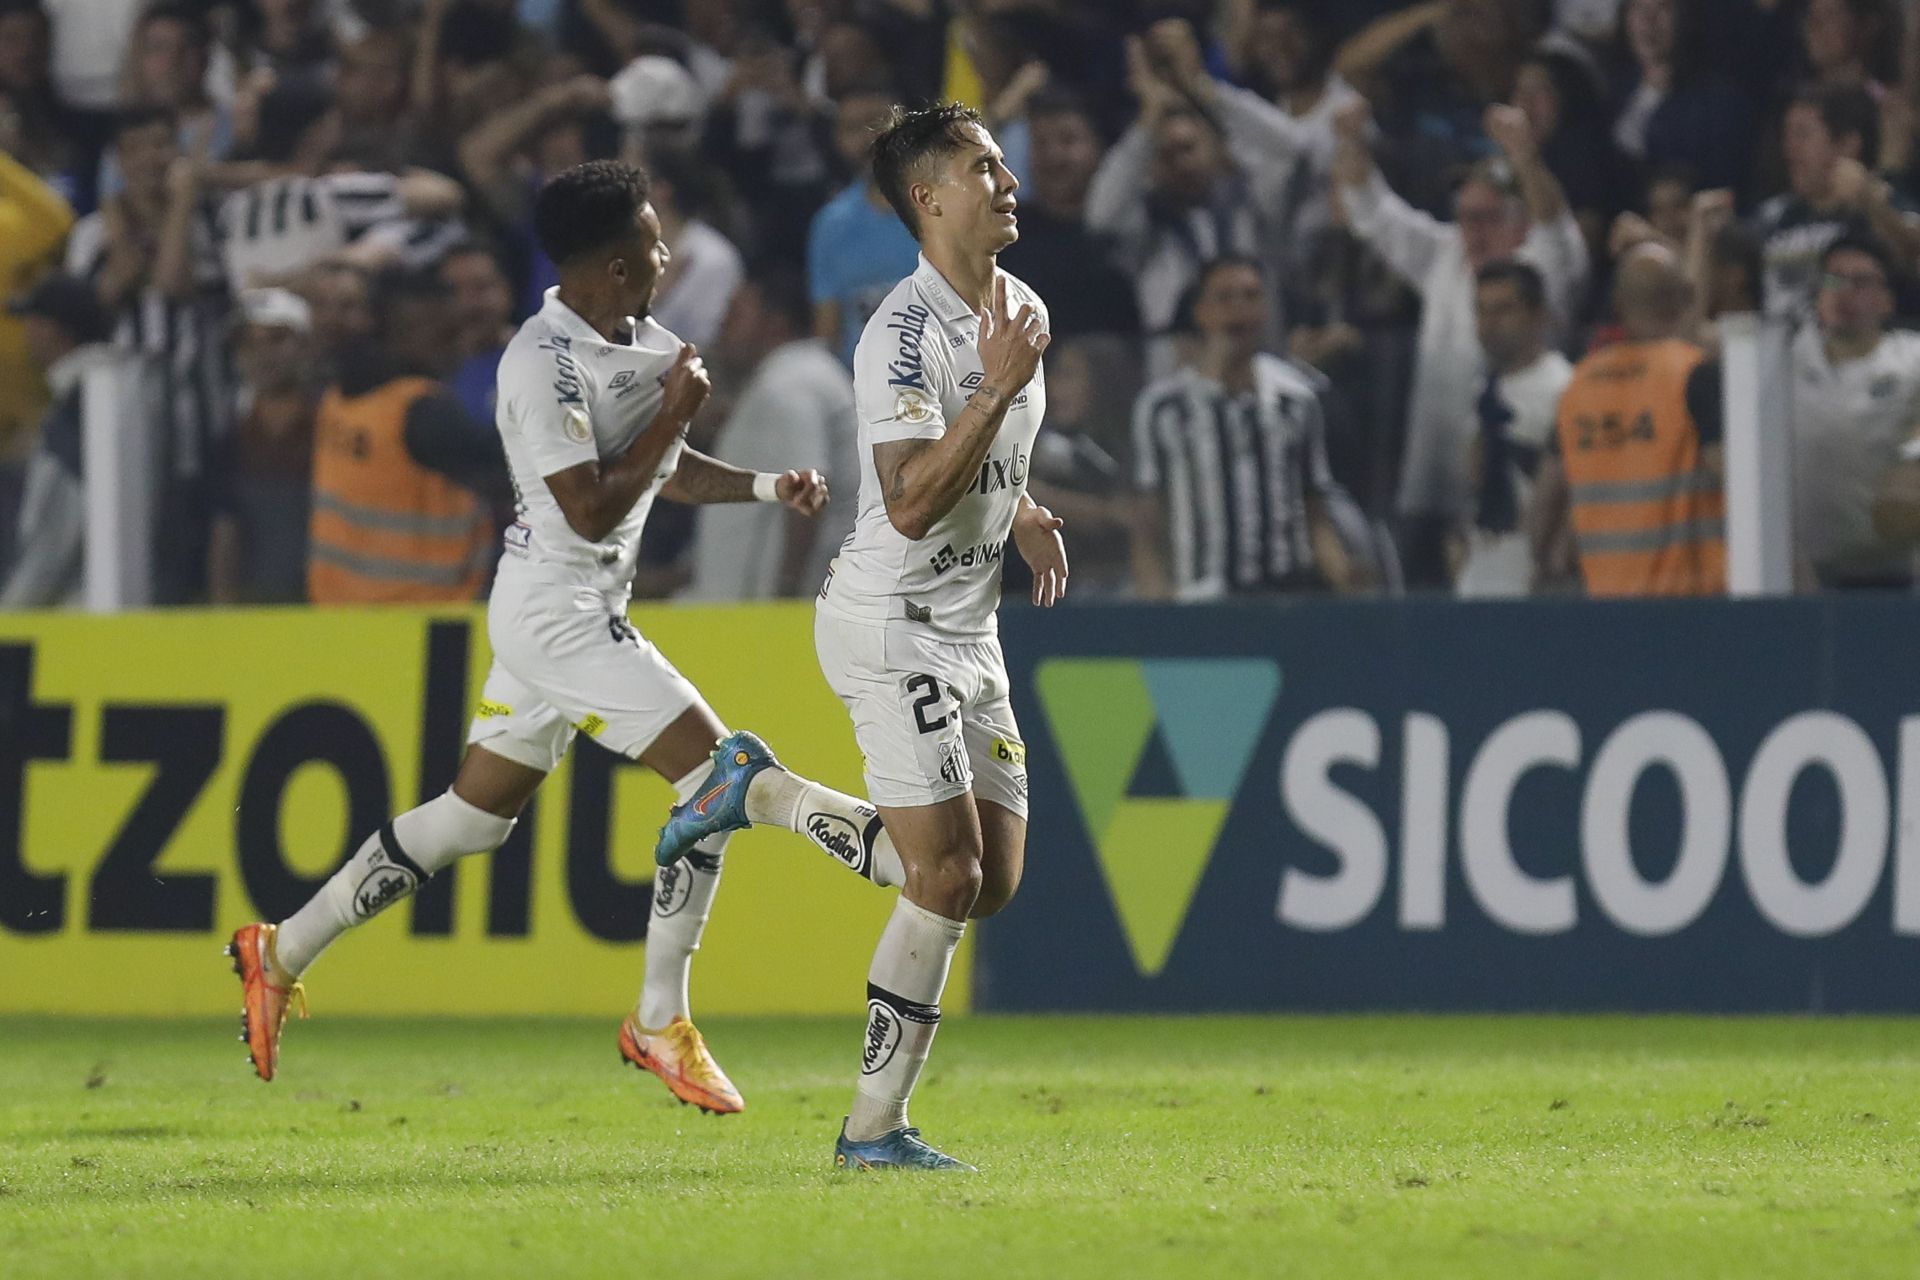 Santos face Deportivo Tachira in the Copa Sudamericana on Wednesday